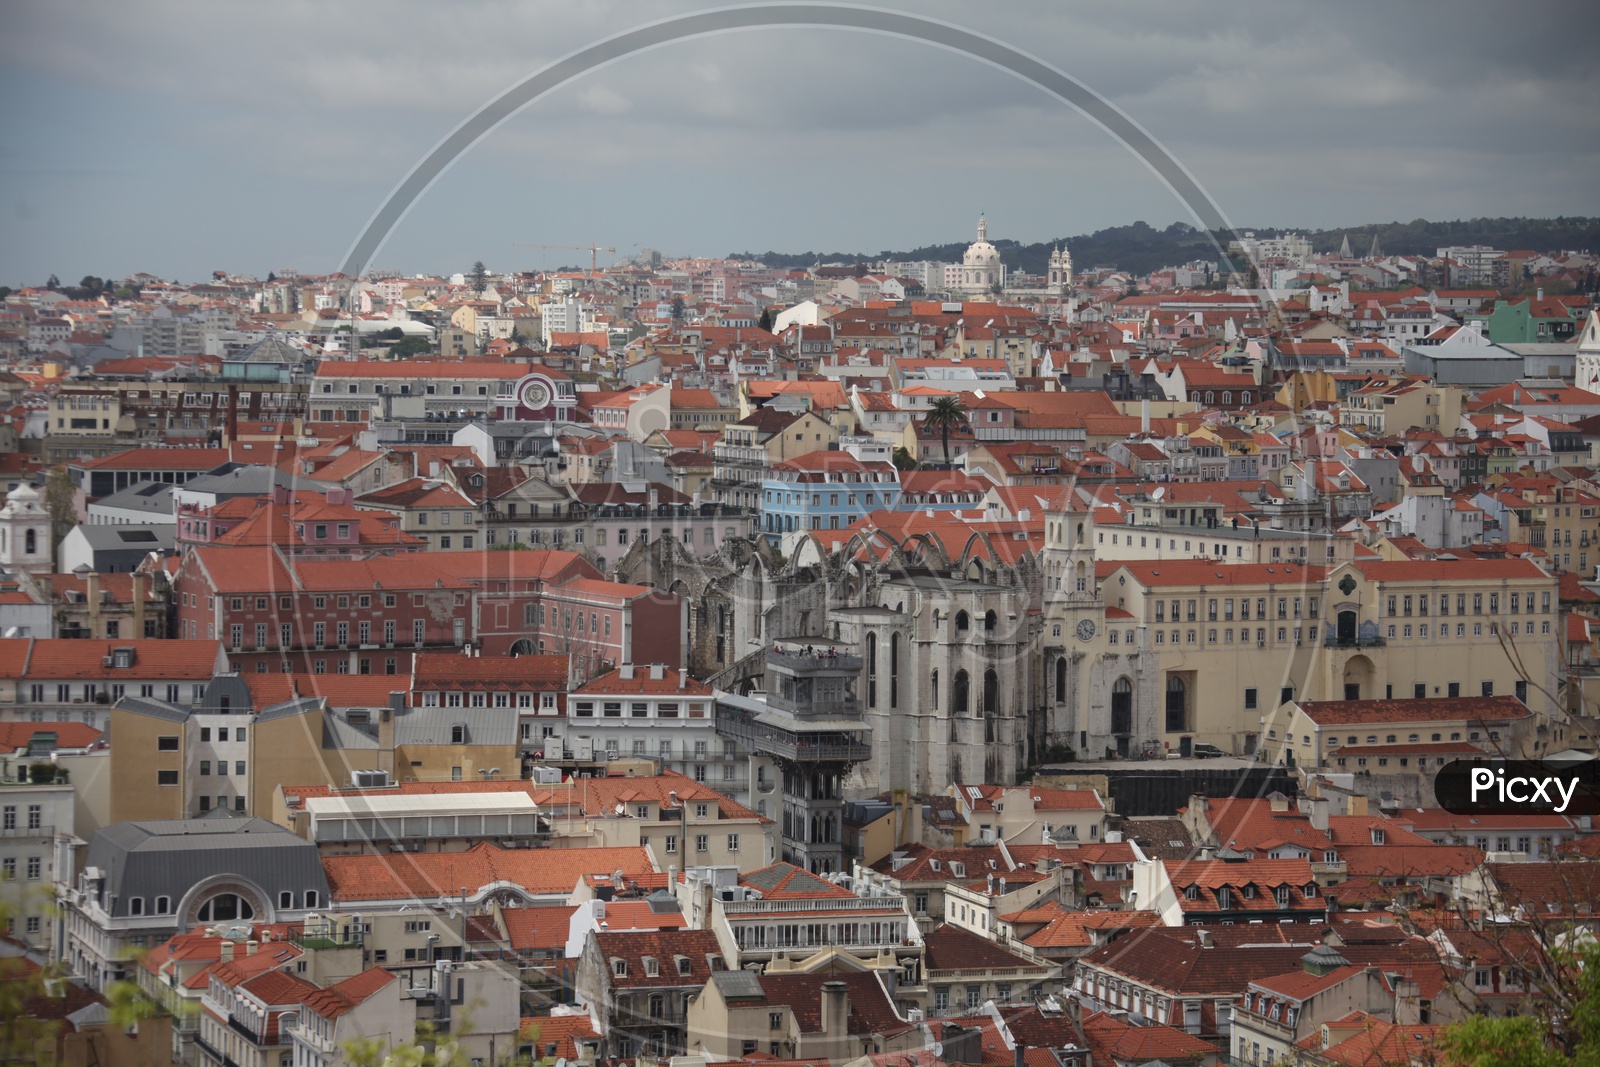 Lisbon city view